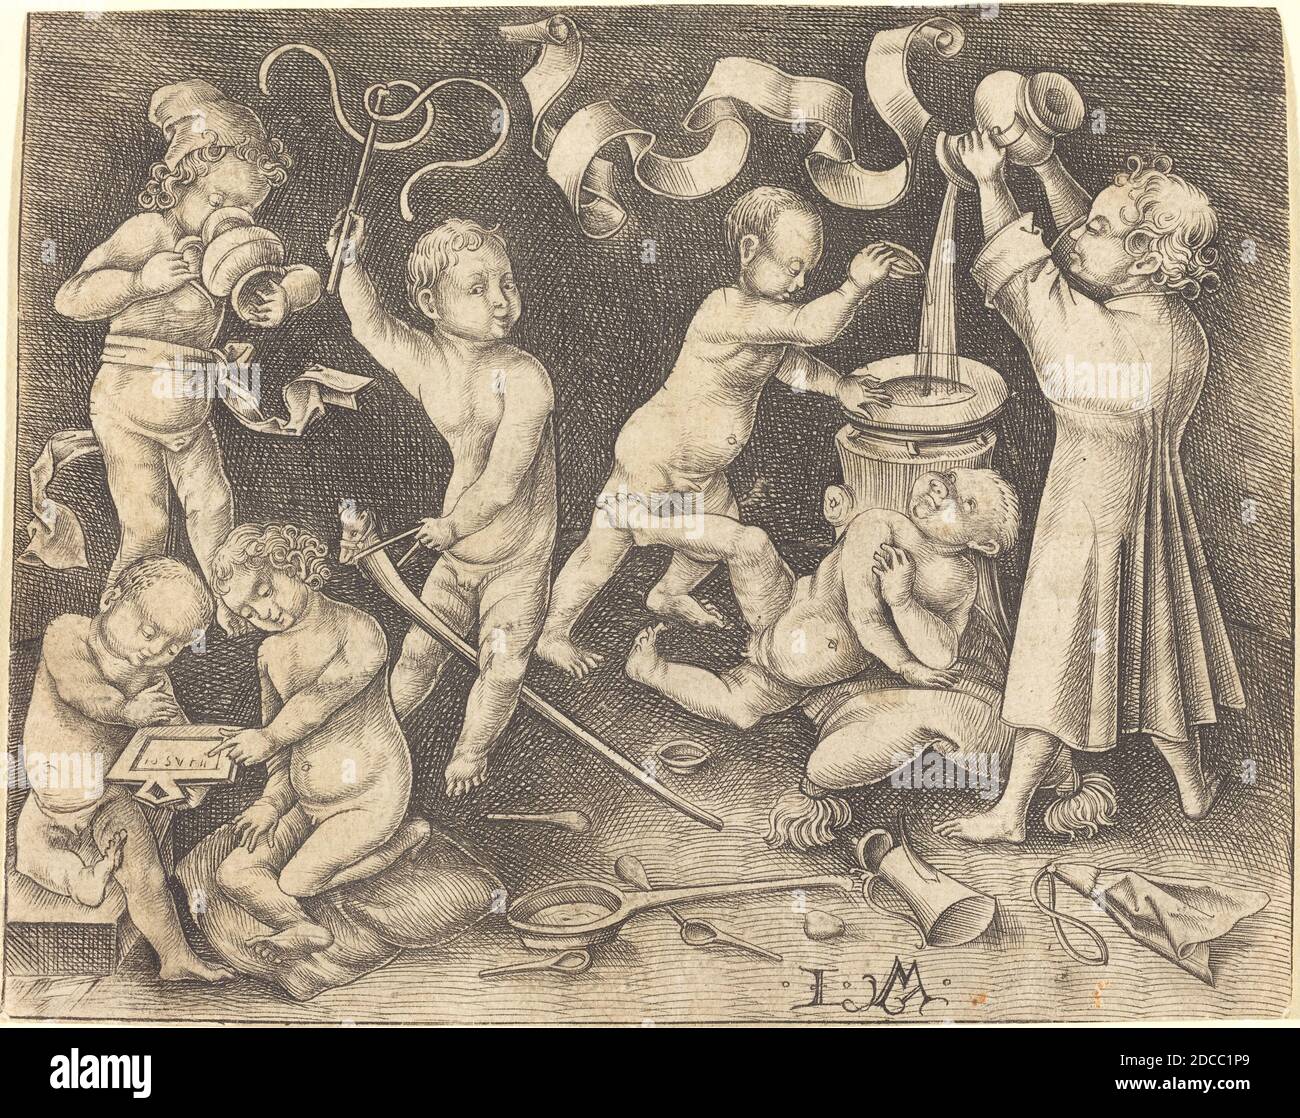 Israhel van Meckenem, (artist), German, c. 1445 - 1503, Seven Children at Play, c. 1490, engraving Stock Photo